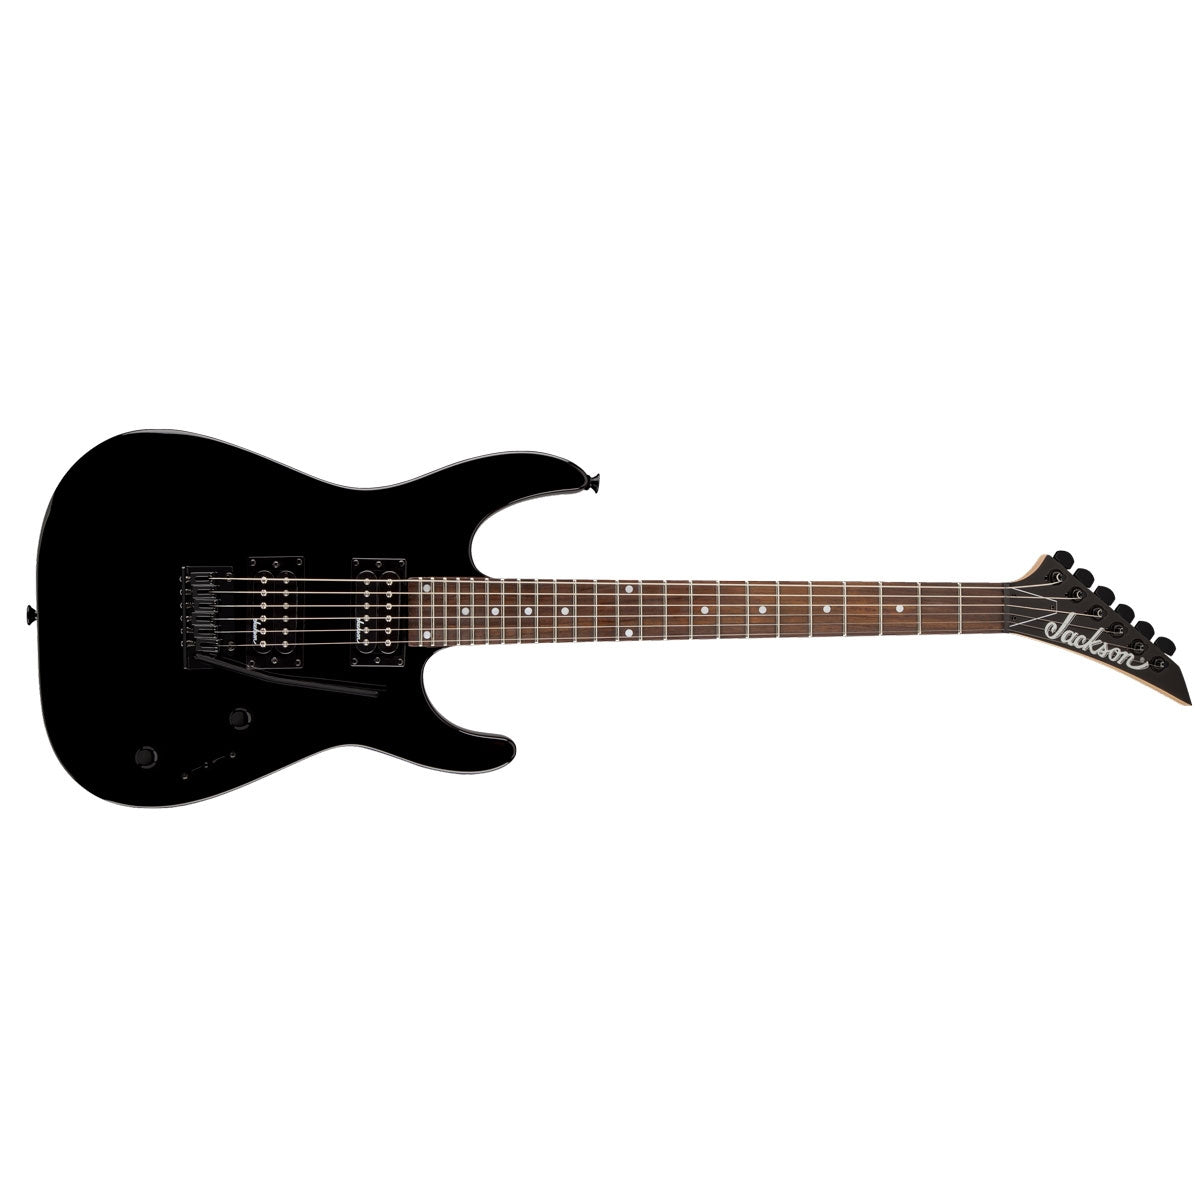 Guitarra Electrica Jackson Js12 Dinky, Rw Fb 24ft, Blk, 2910111503